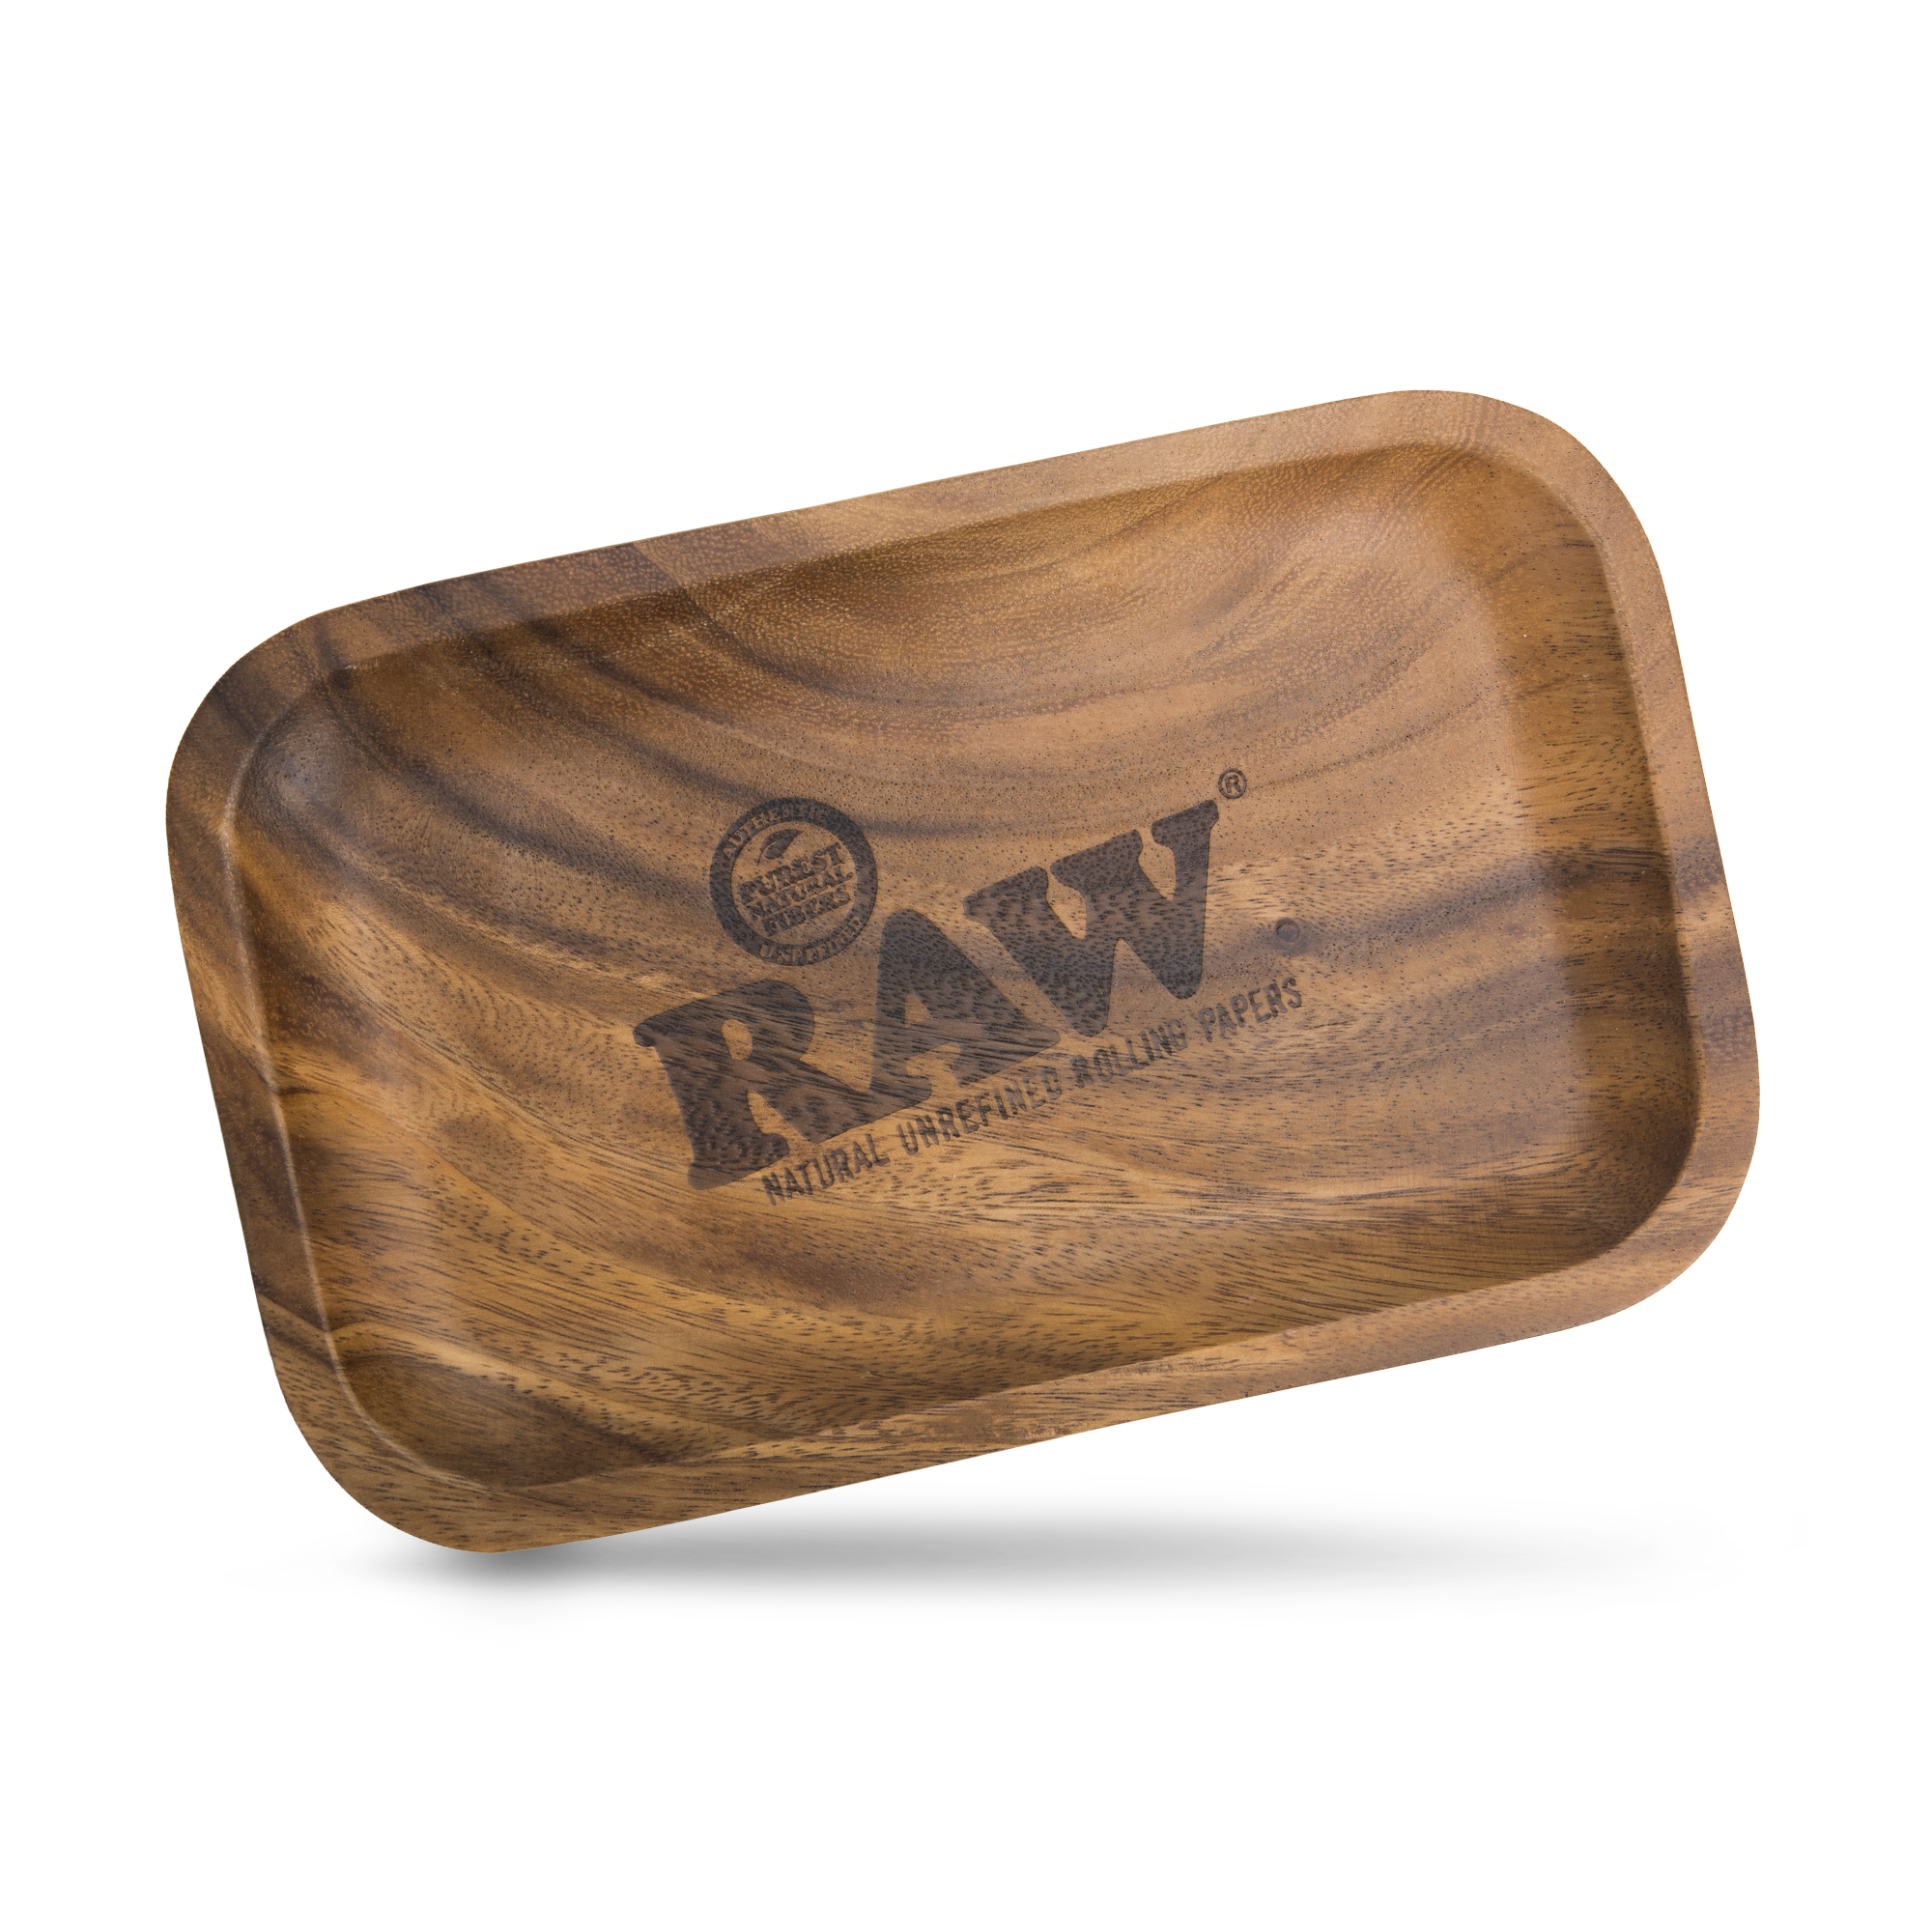 Bandeja Raw Rolling Tray Daze Grande 34X27,5CM